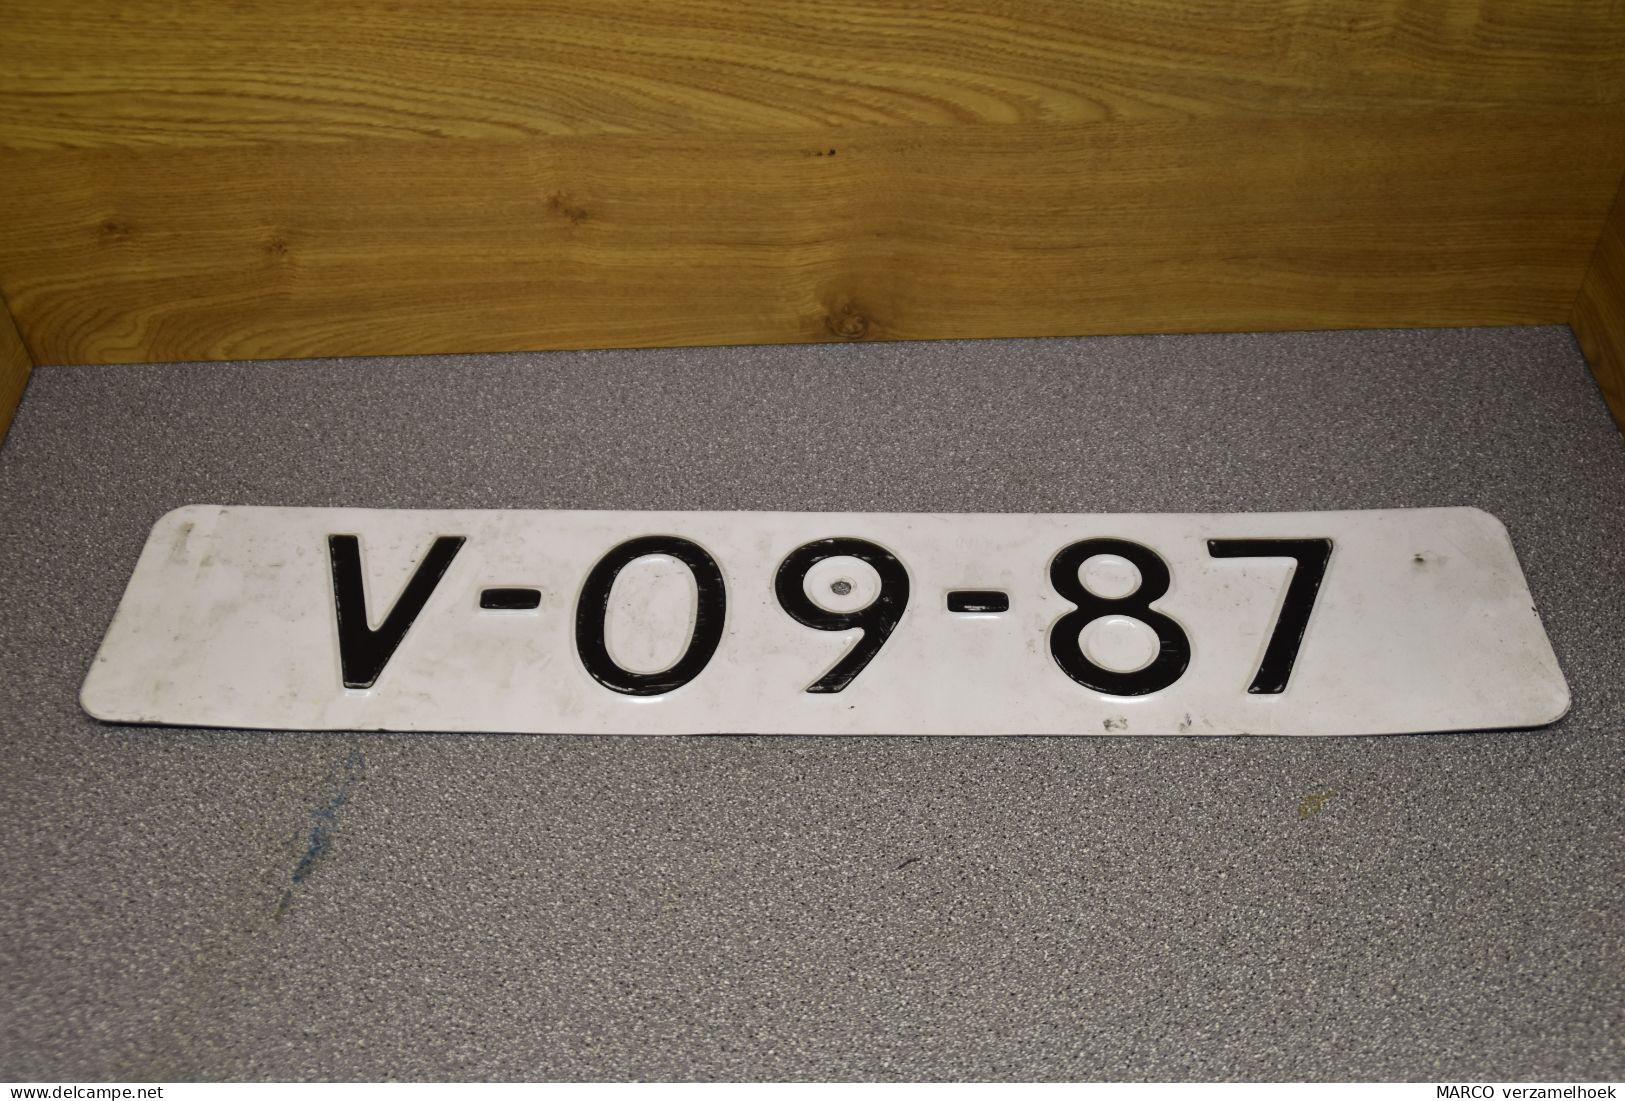 License Plate-nummerplaat-Nummernschild Nederland NL Tijdelijke Plaat Limburg Oud-old - Number Plates